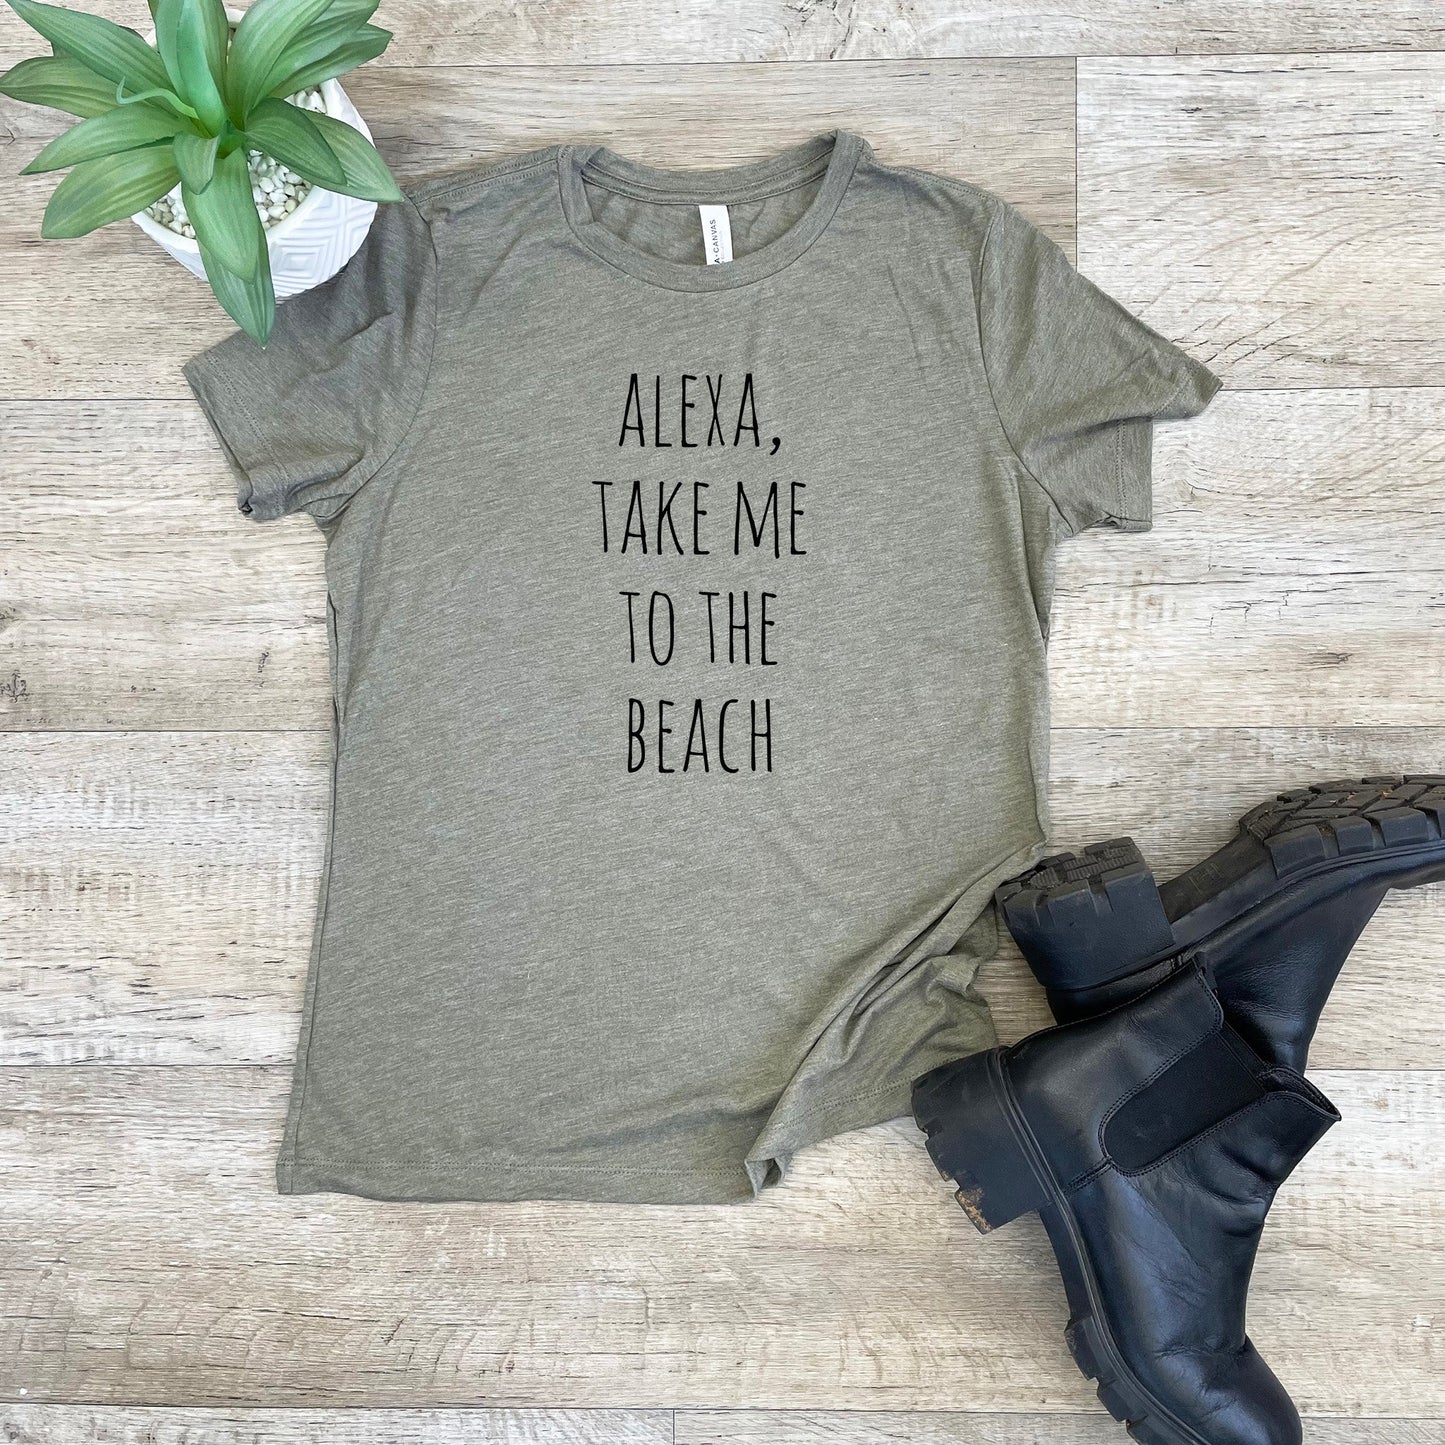 Alexa, Take Me To The Beach - Women's Crew Tee - Olive or Dusty Blue